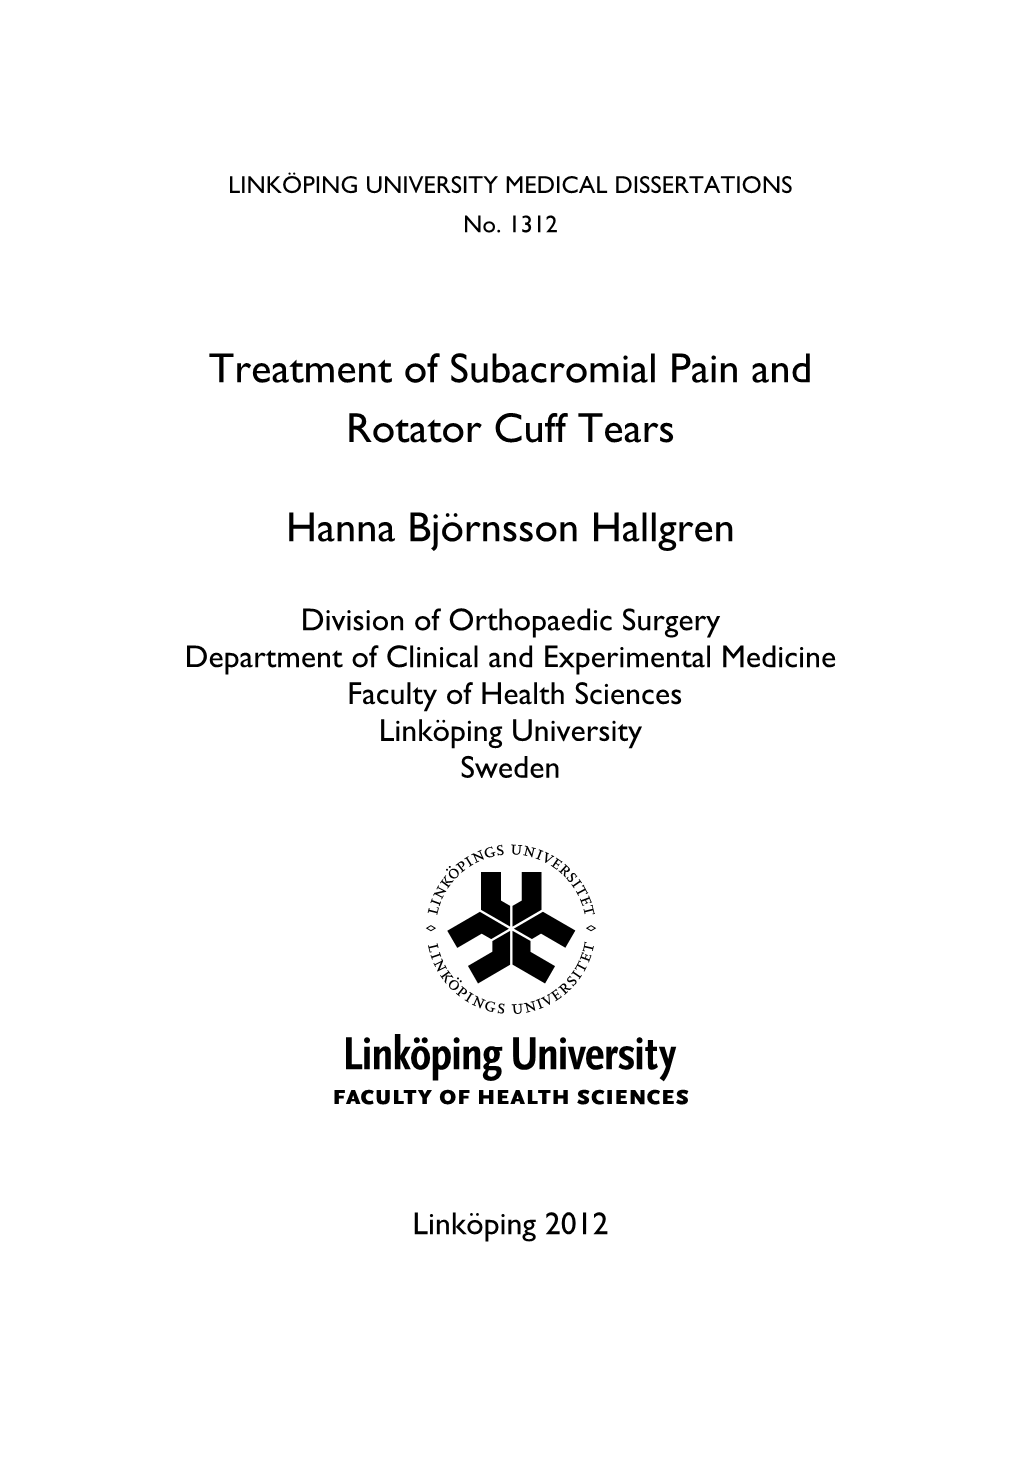 Treatment of Subacromial Pain and Rotator Cuff Tears Hanna Björnsson Hallgren